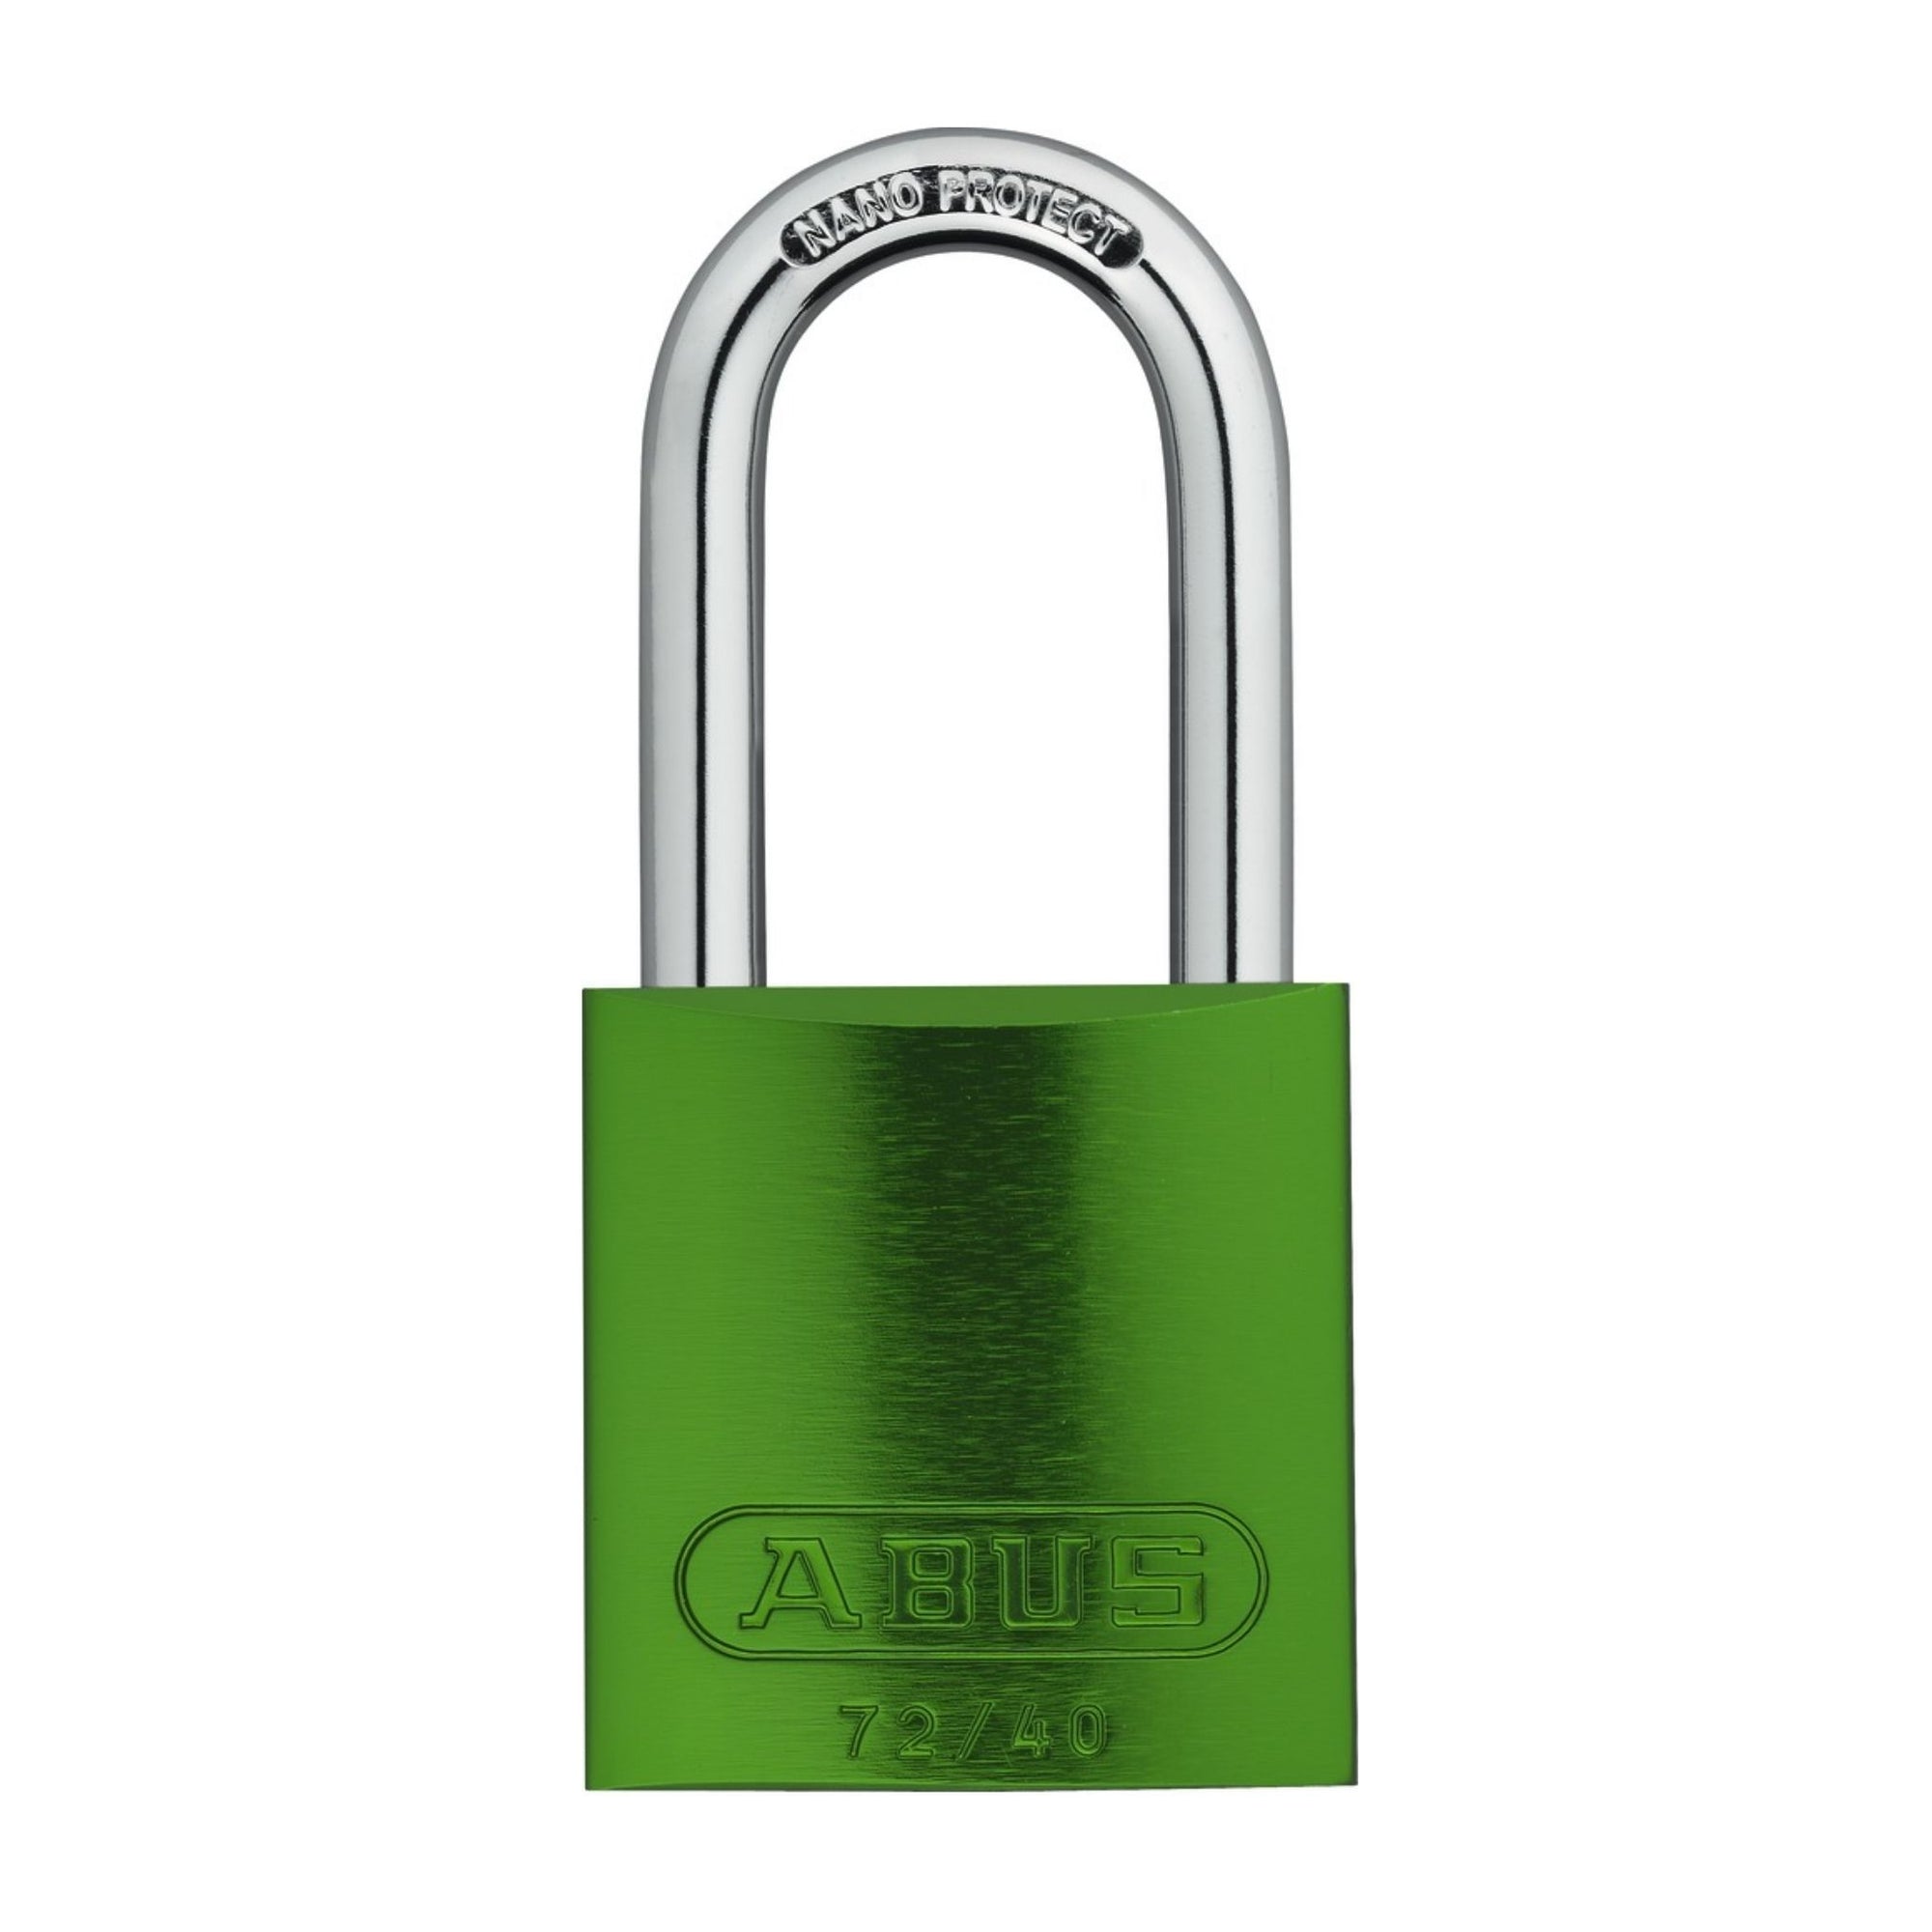 Abus 72/40 KA TT00036 Green Titalium Safety Padlock with 1-Inch Shackle, Keyed Alike to Match Existing Key Number KATT00036 - The Lock Source 